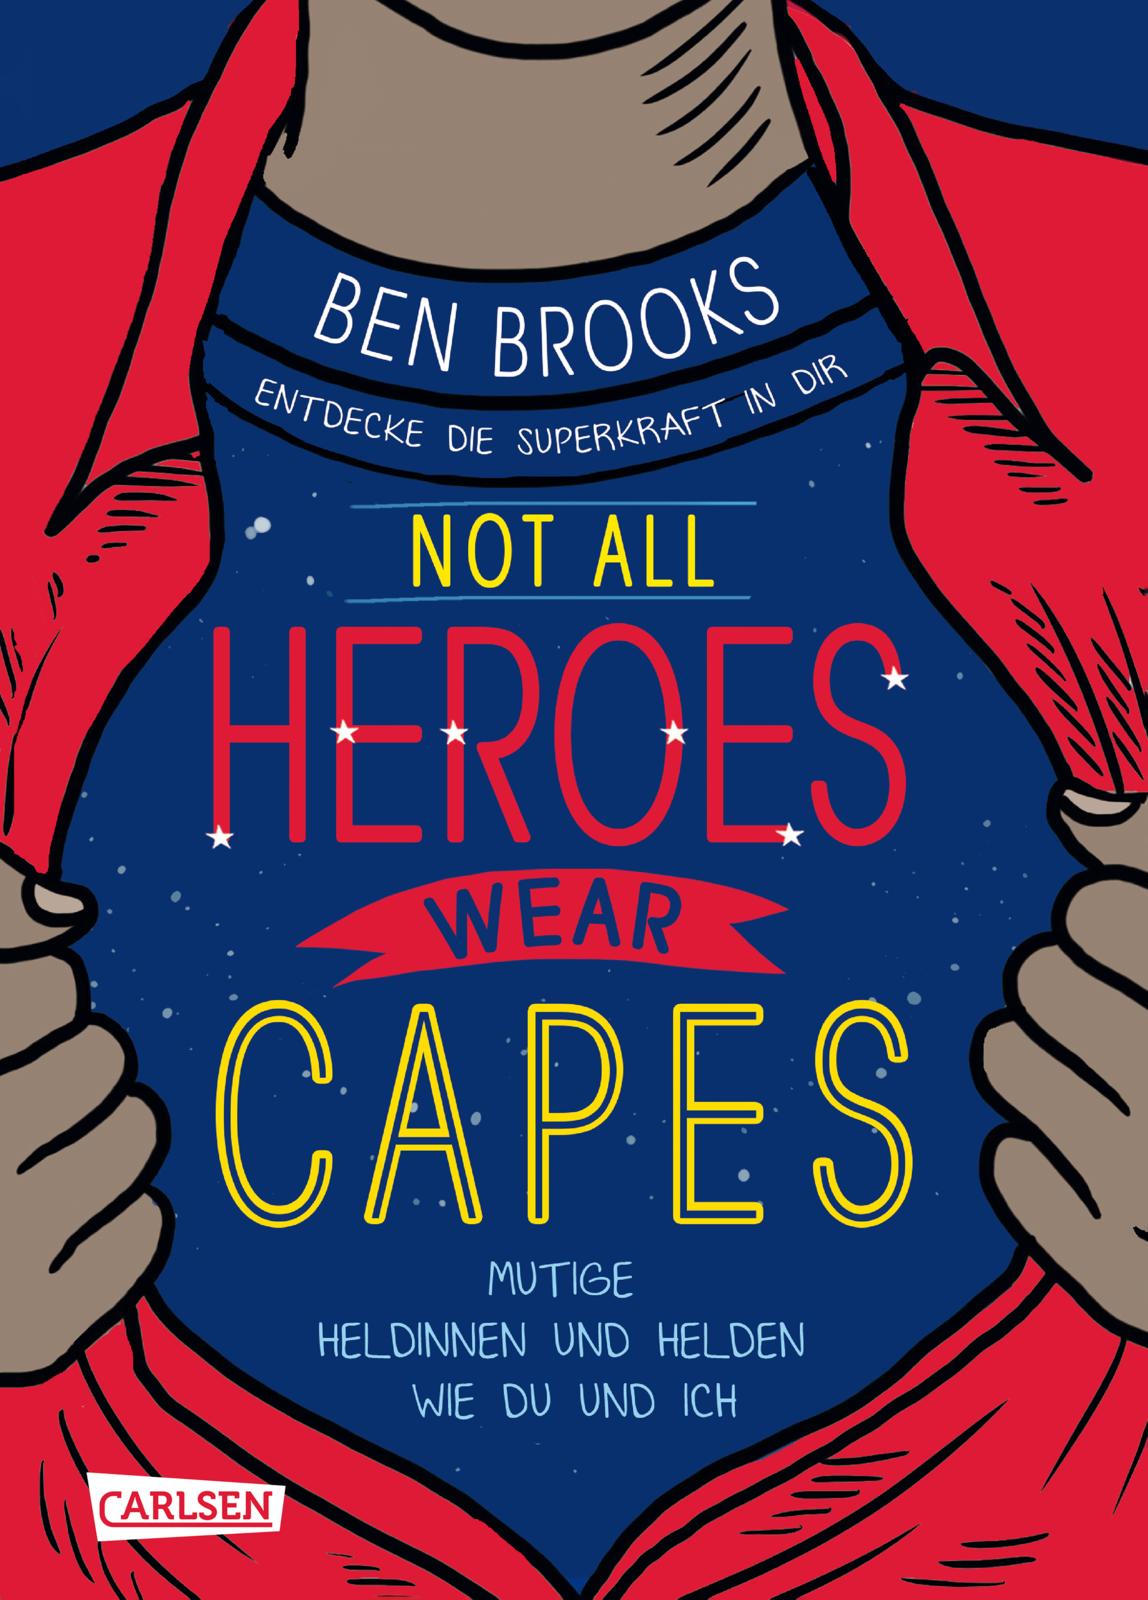 Buchcover "Not all Heroes war Capes", Carlsen